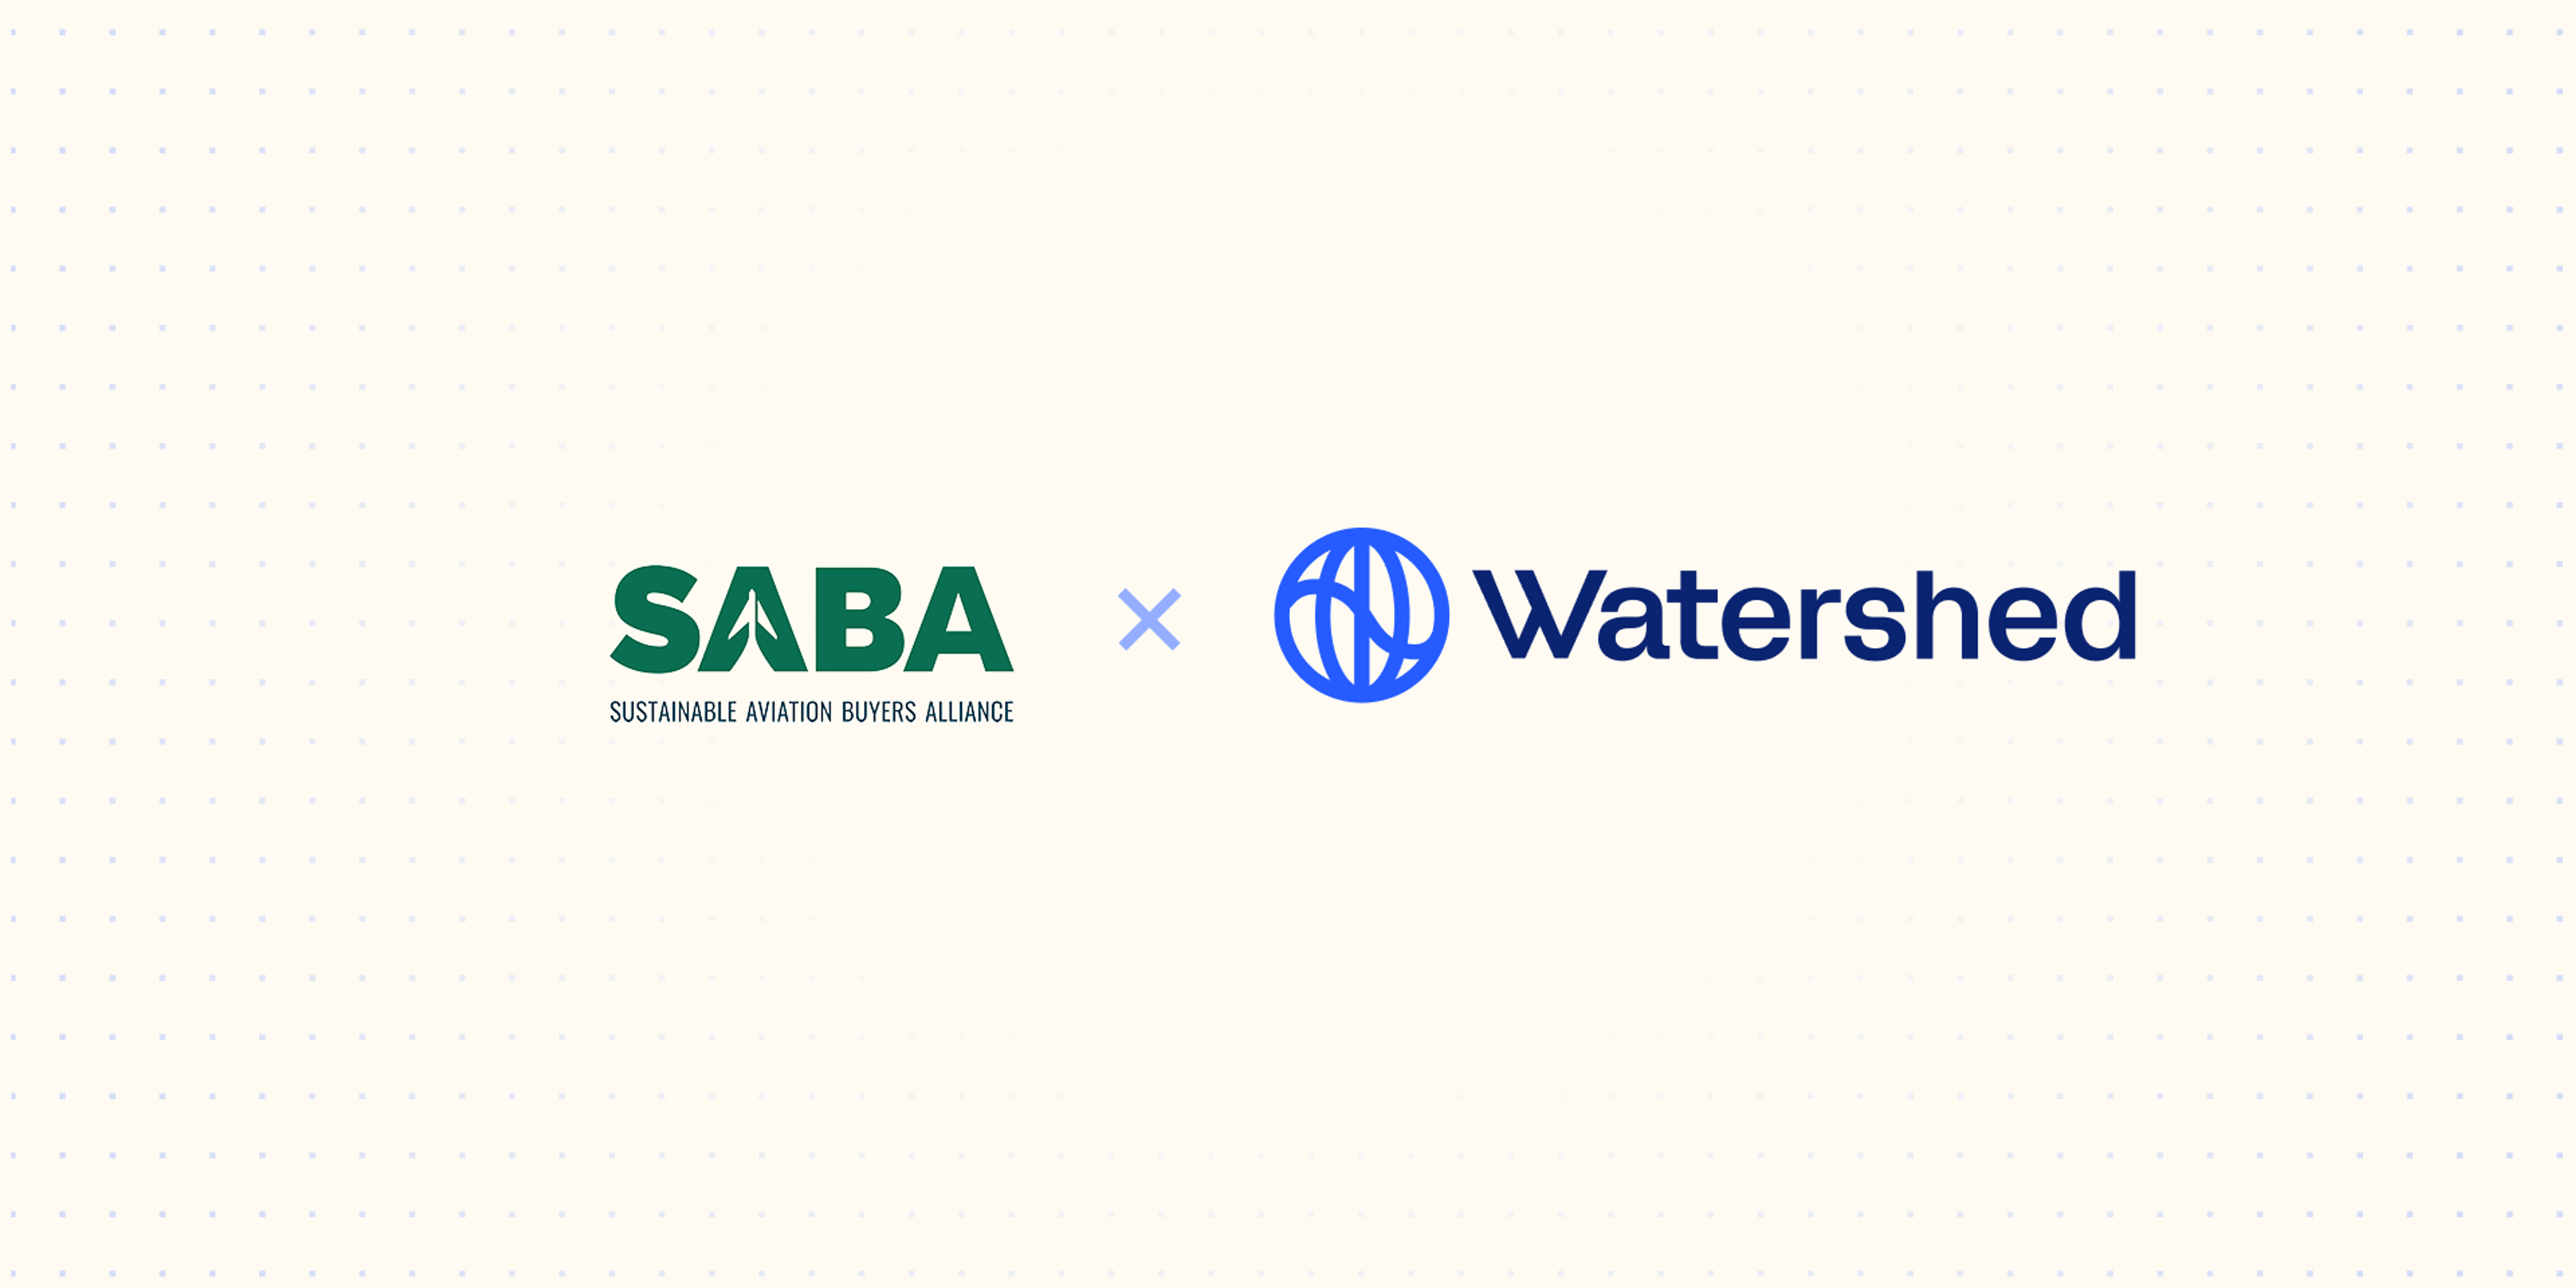 SABA and Watershed logos